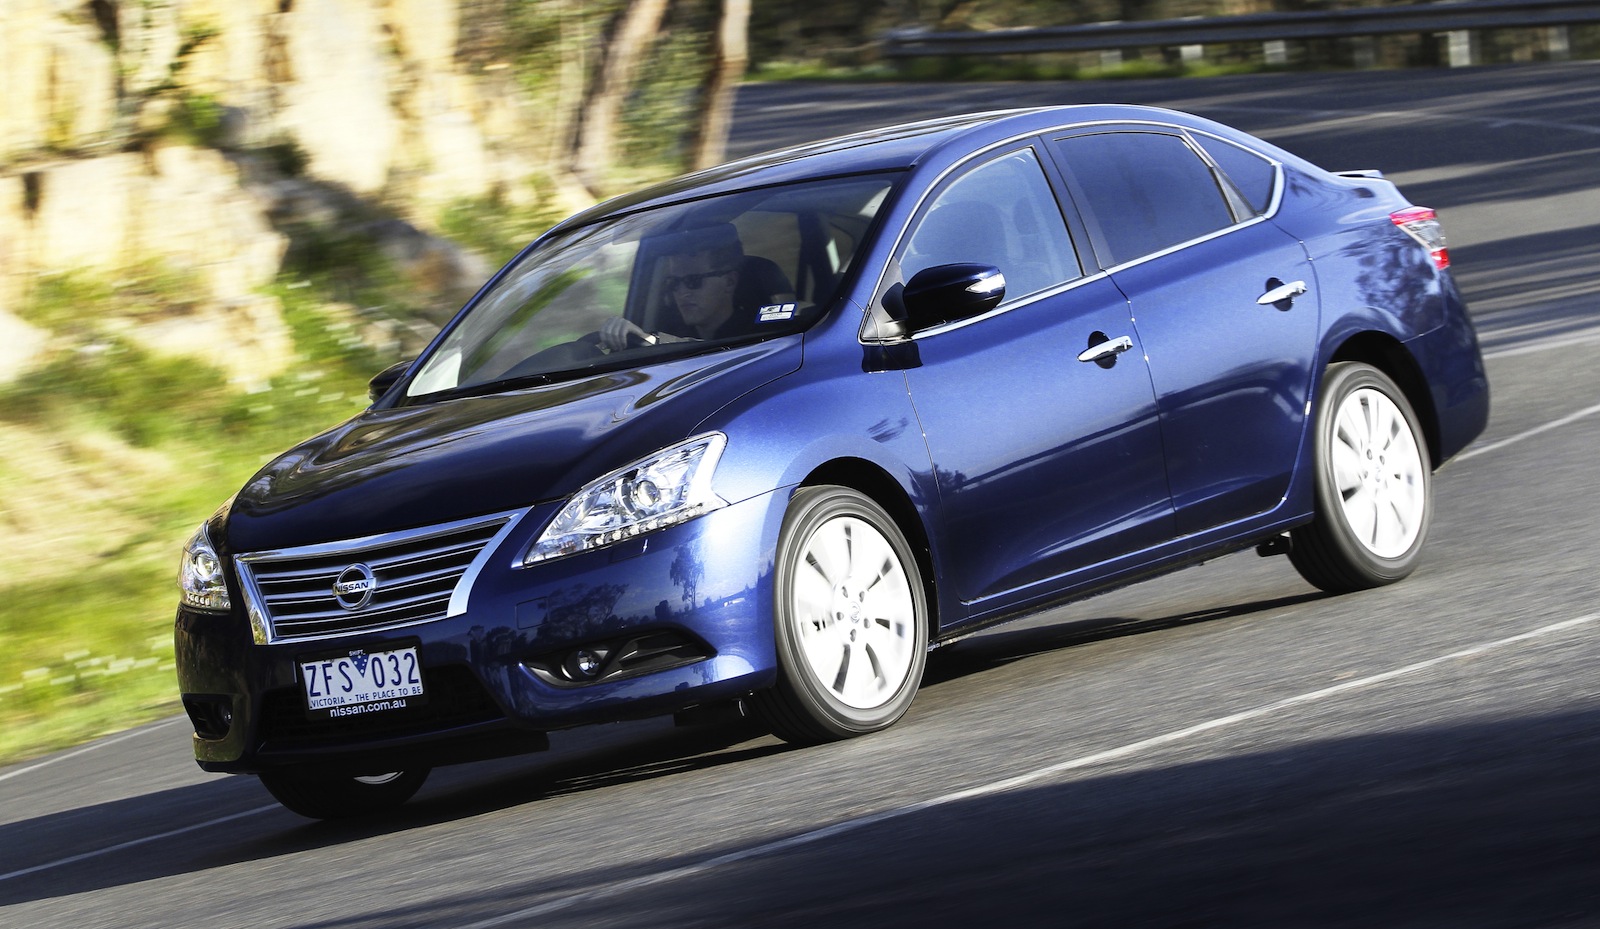 Nissan australia vehicle recalls #7